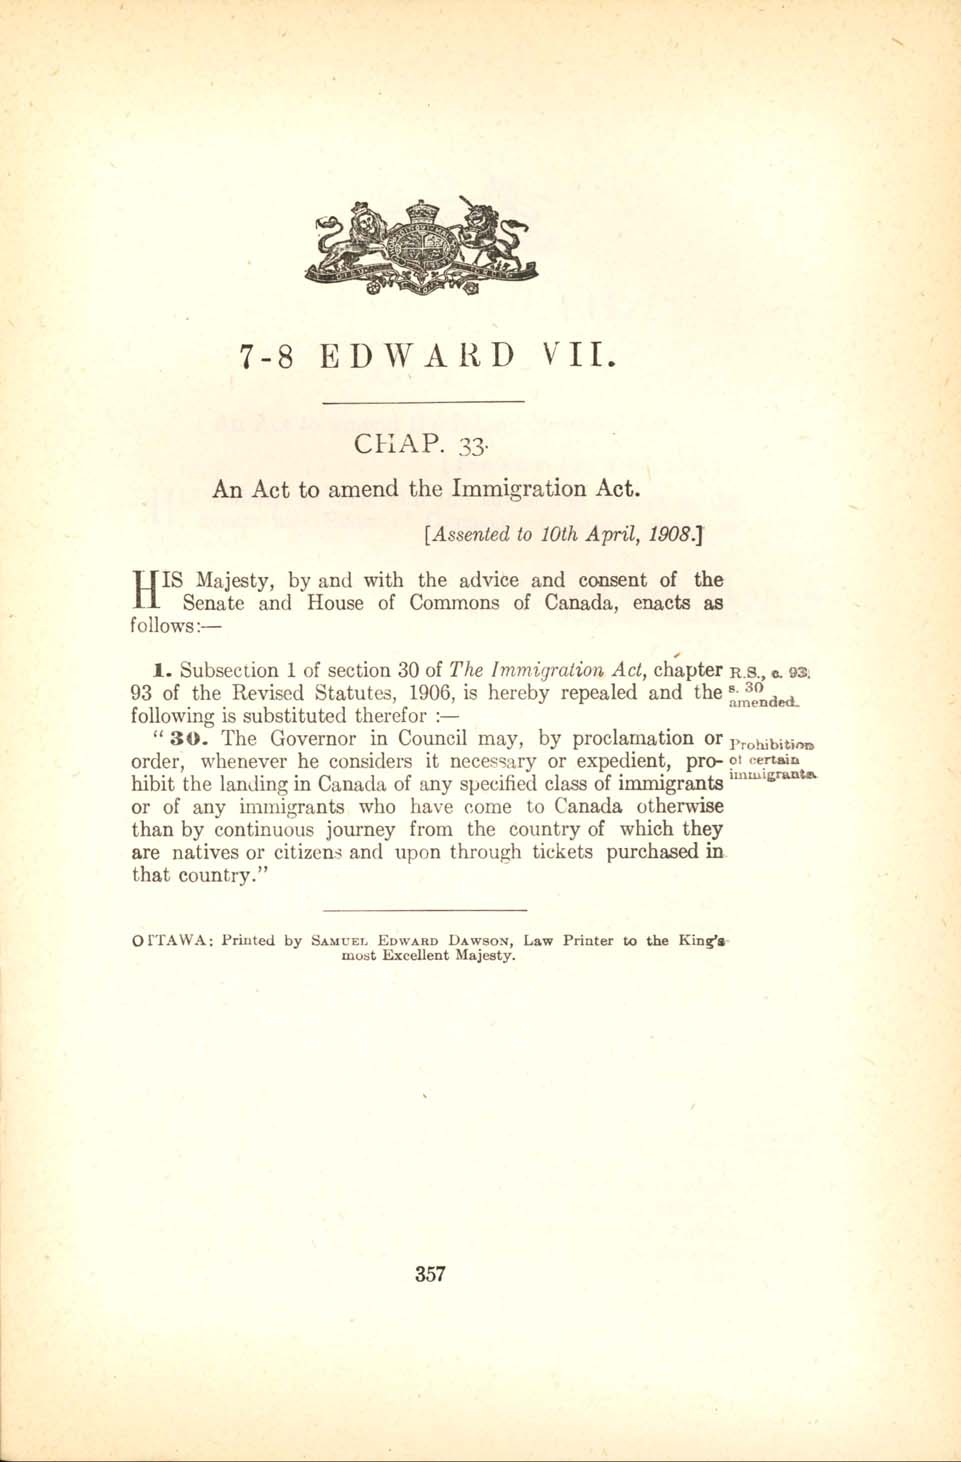 Chap. 33 Page 357 Continuous Journey Regulation, 1908